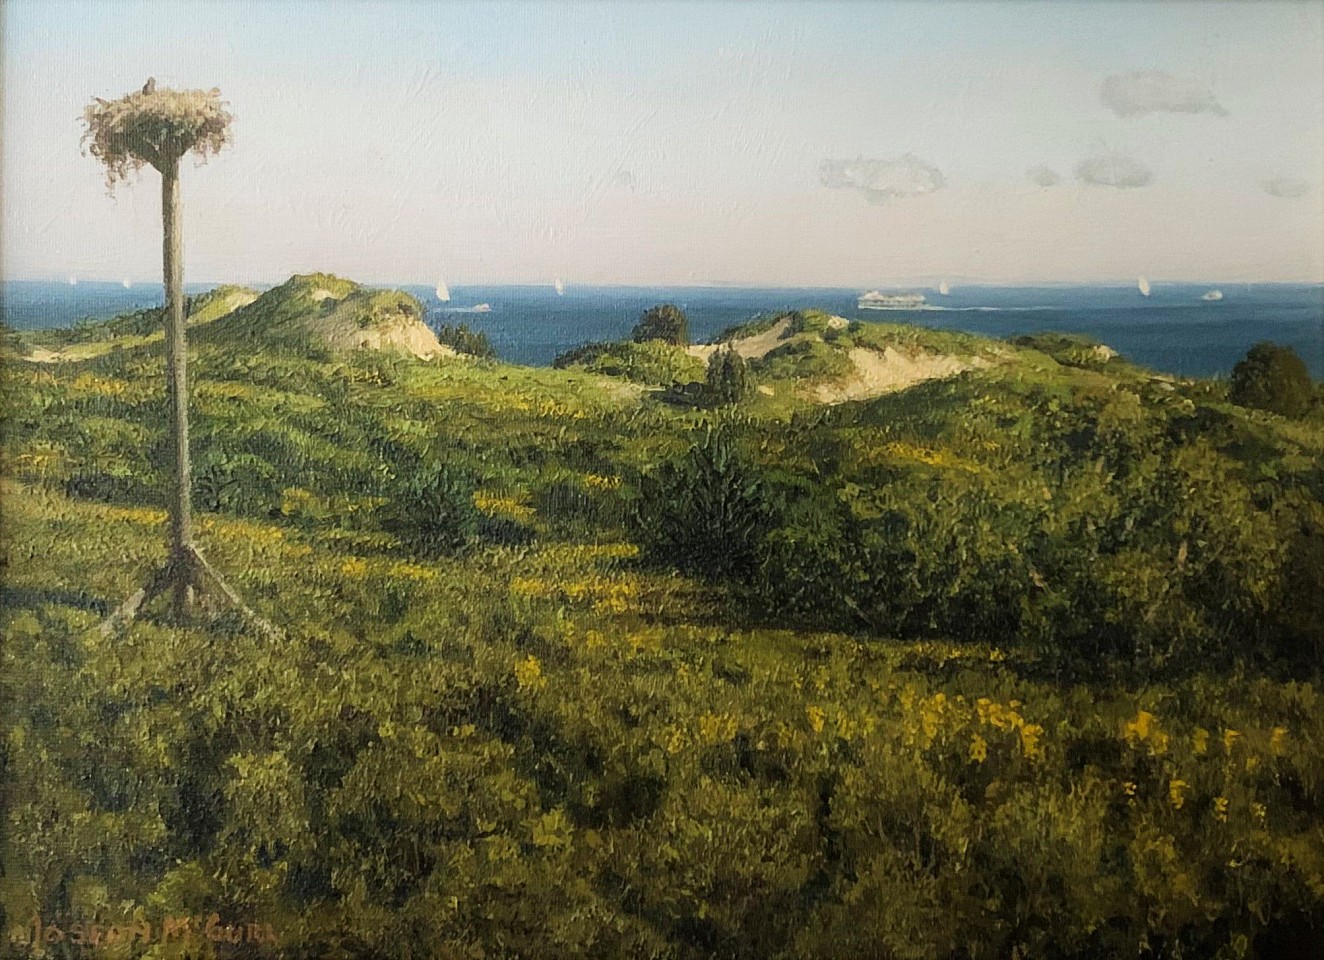 Joseph McGurl, Field Study, Nantucket Dunes, 2020
oil on panel, 9 x 12 in. (22.9 x 30.5 cm)
JM200304